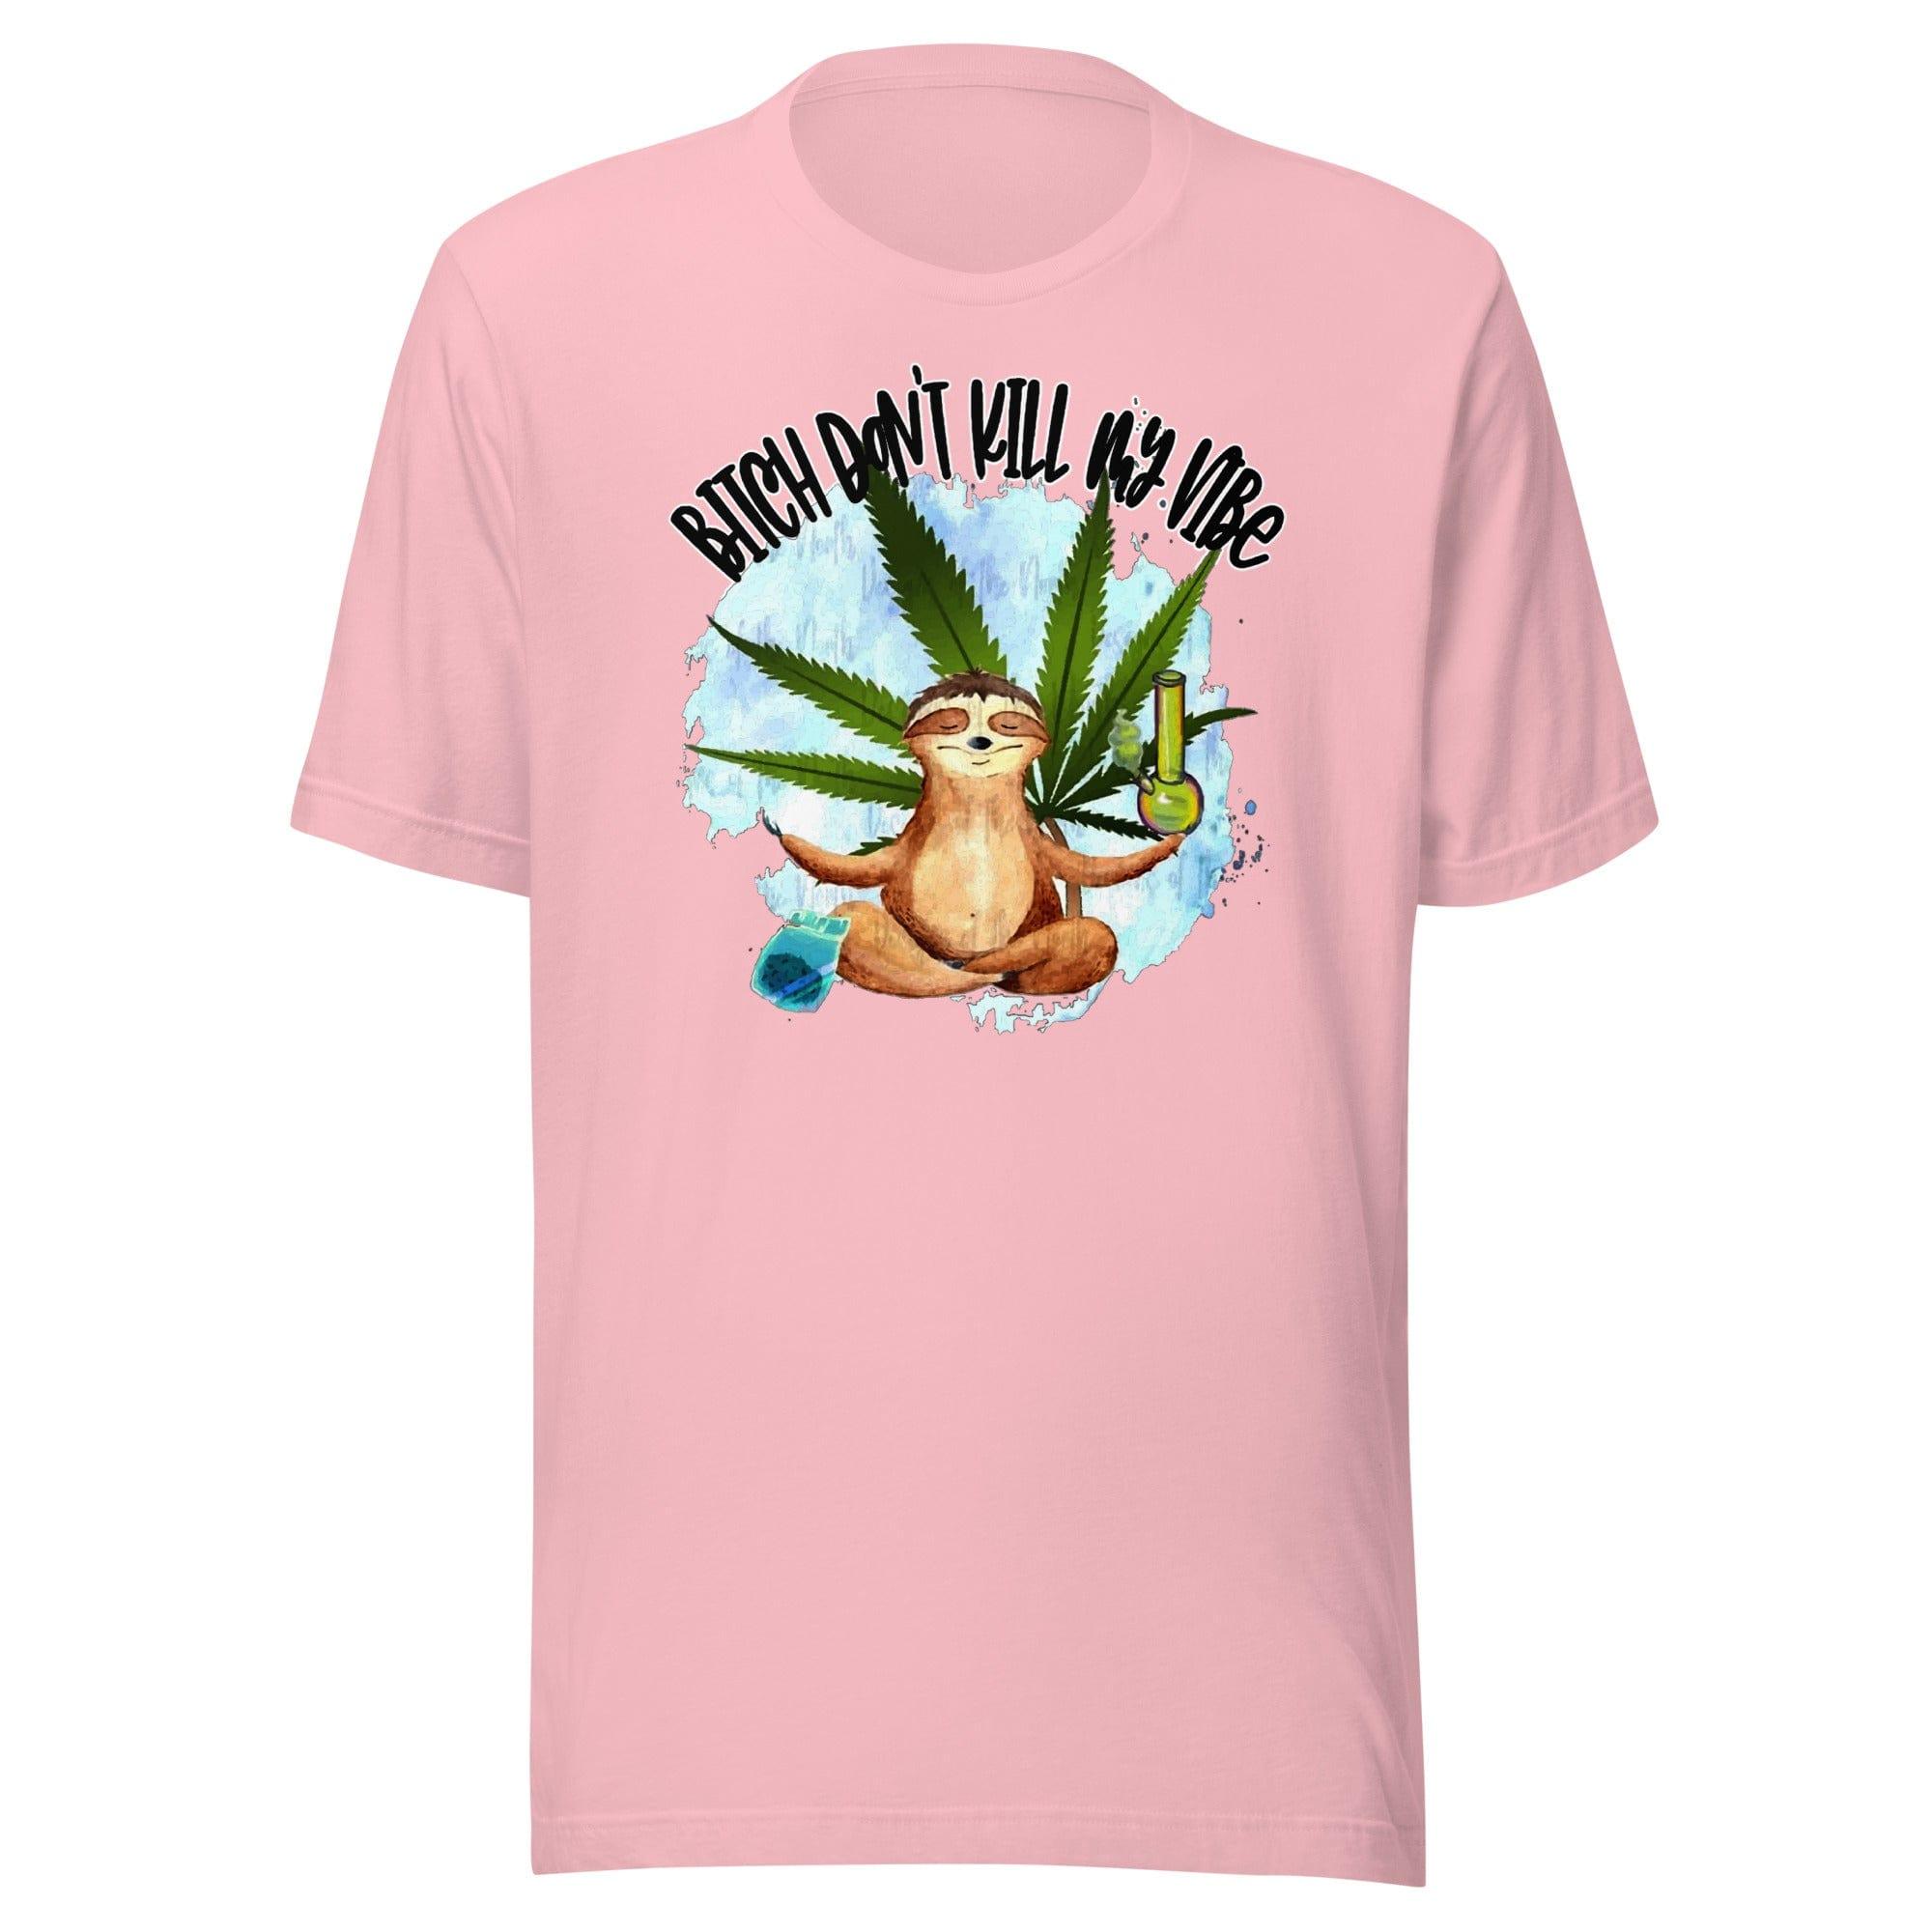 Stoner T-shirt Bitch Don't Kill my Vibe Short Sleeve Unisex Top - TopKoalaTee